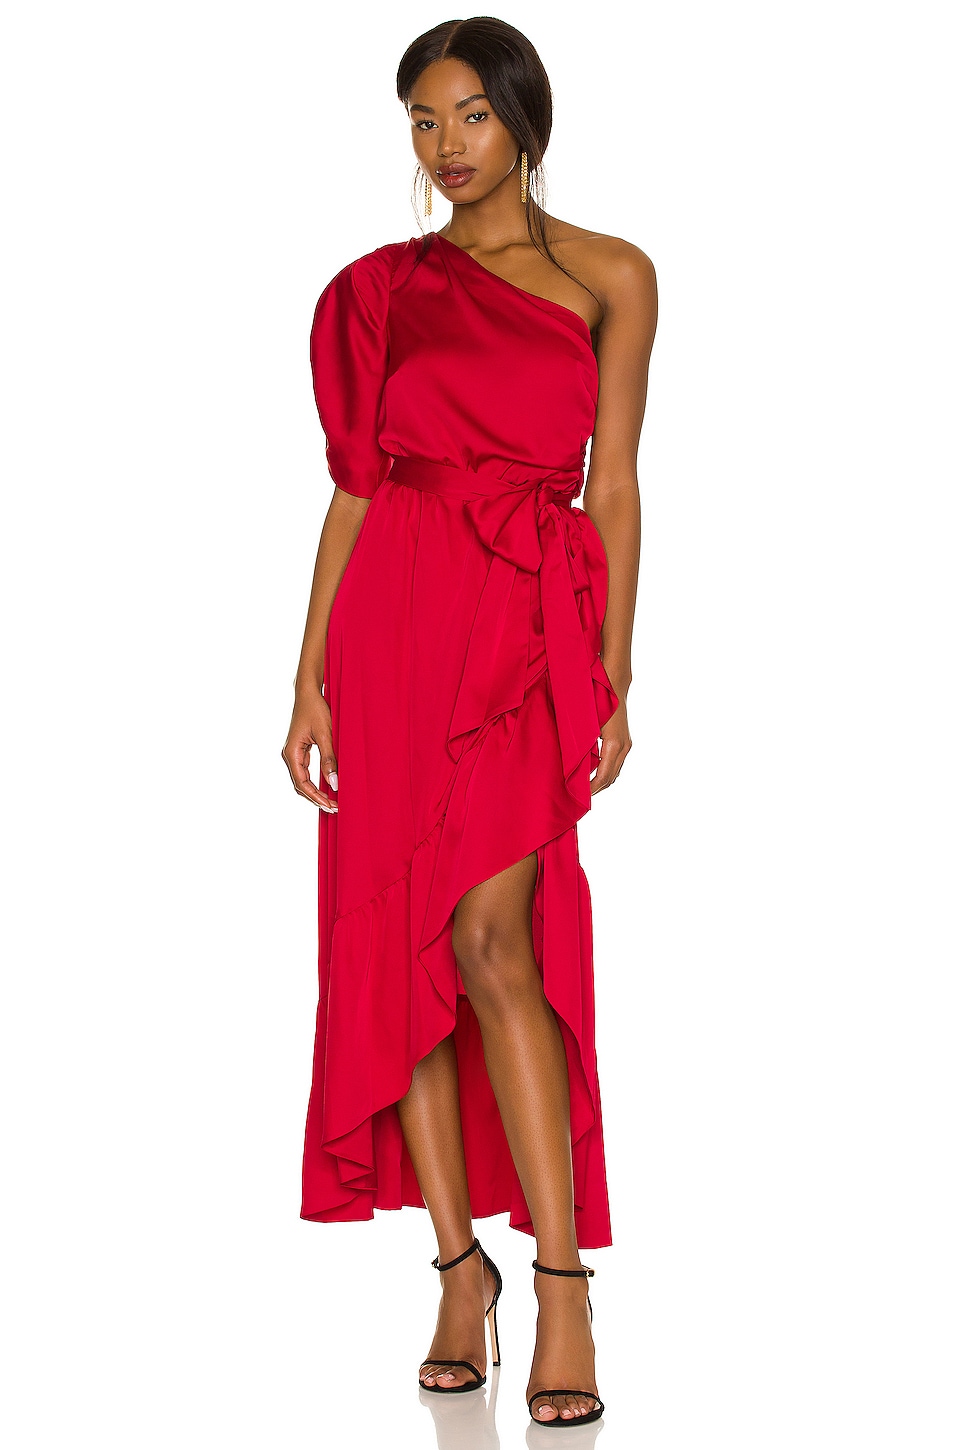 AMUR Topanga Faux Wrap Dress in Garnet Red | REVOLVE